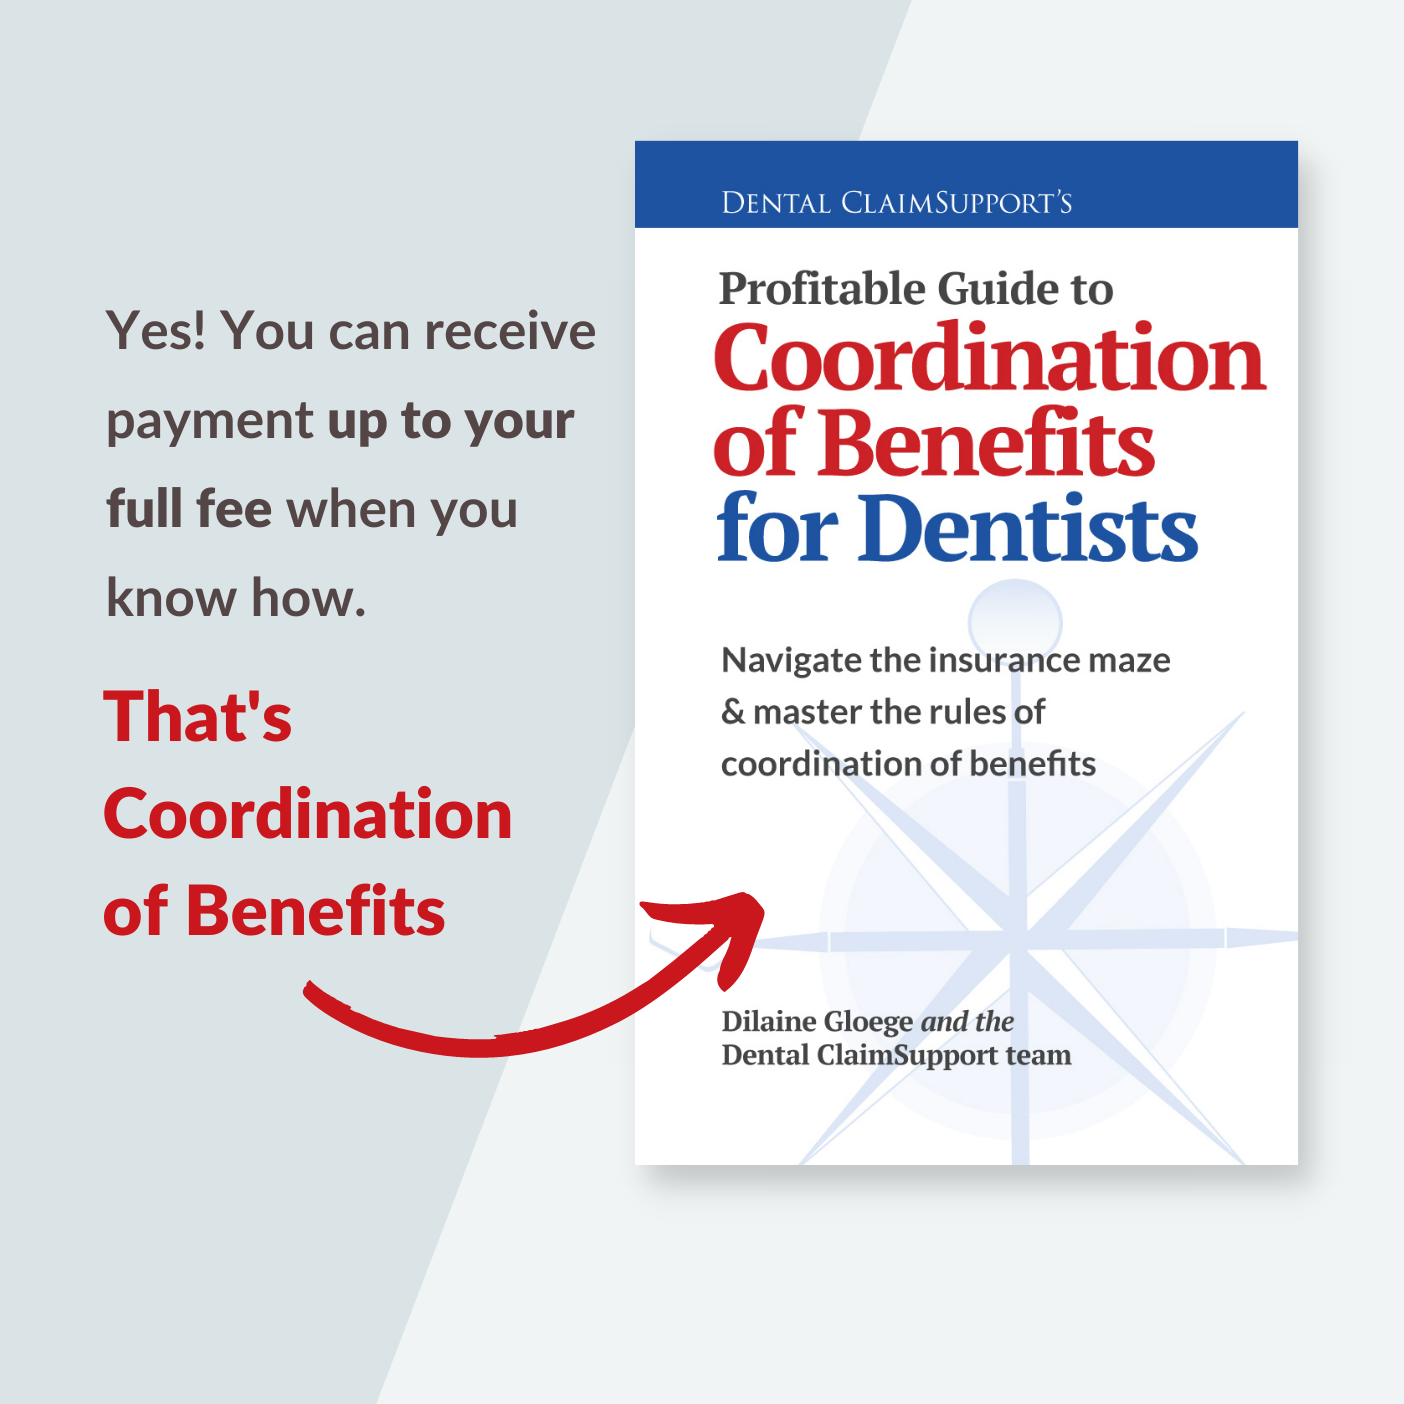 https://fs.hubspotusercontent00.net/hubfs/5825755/coordination-of-benefits-book2.png